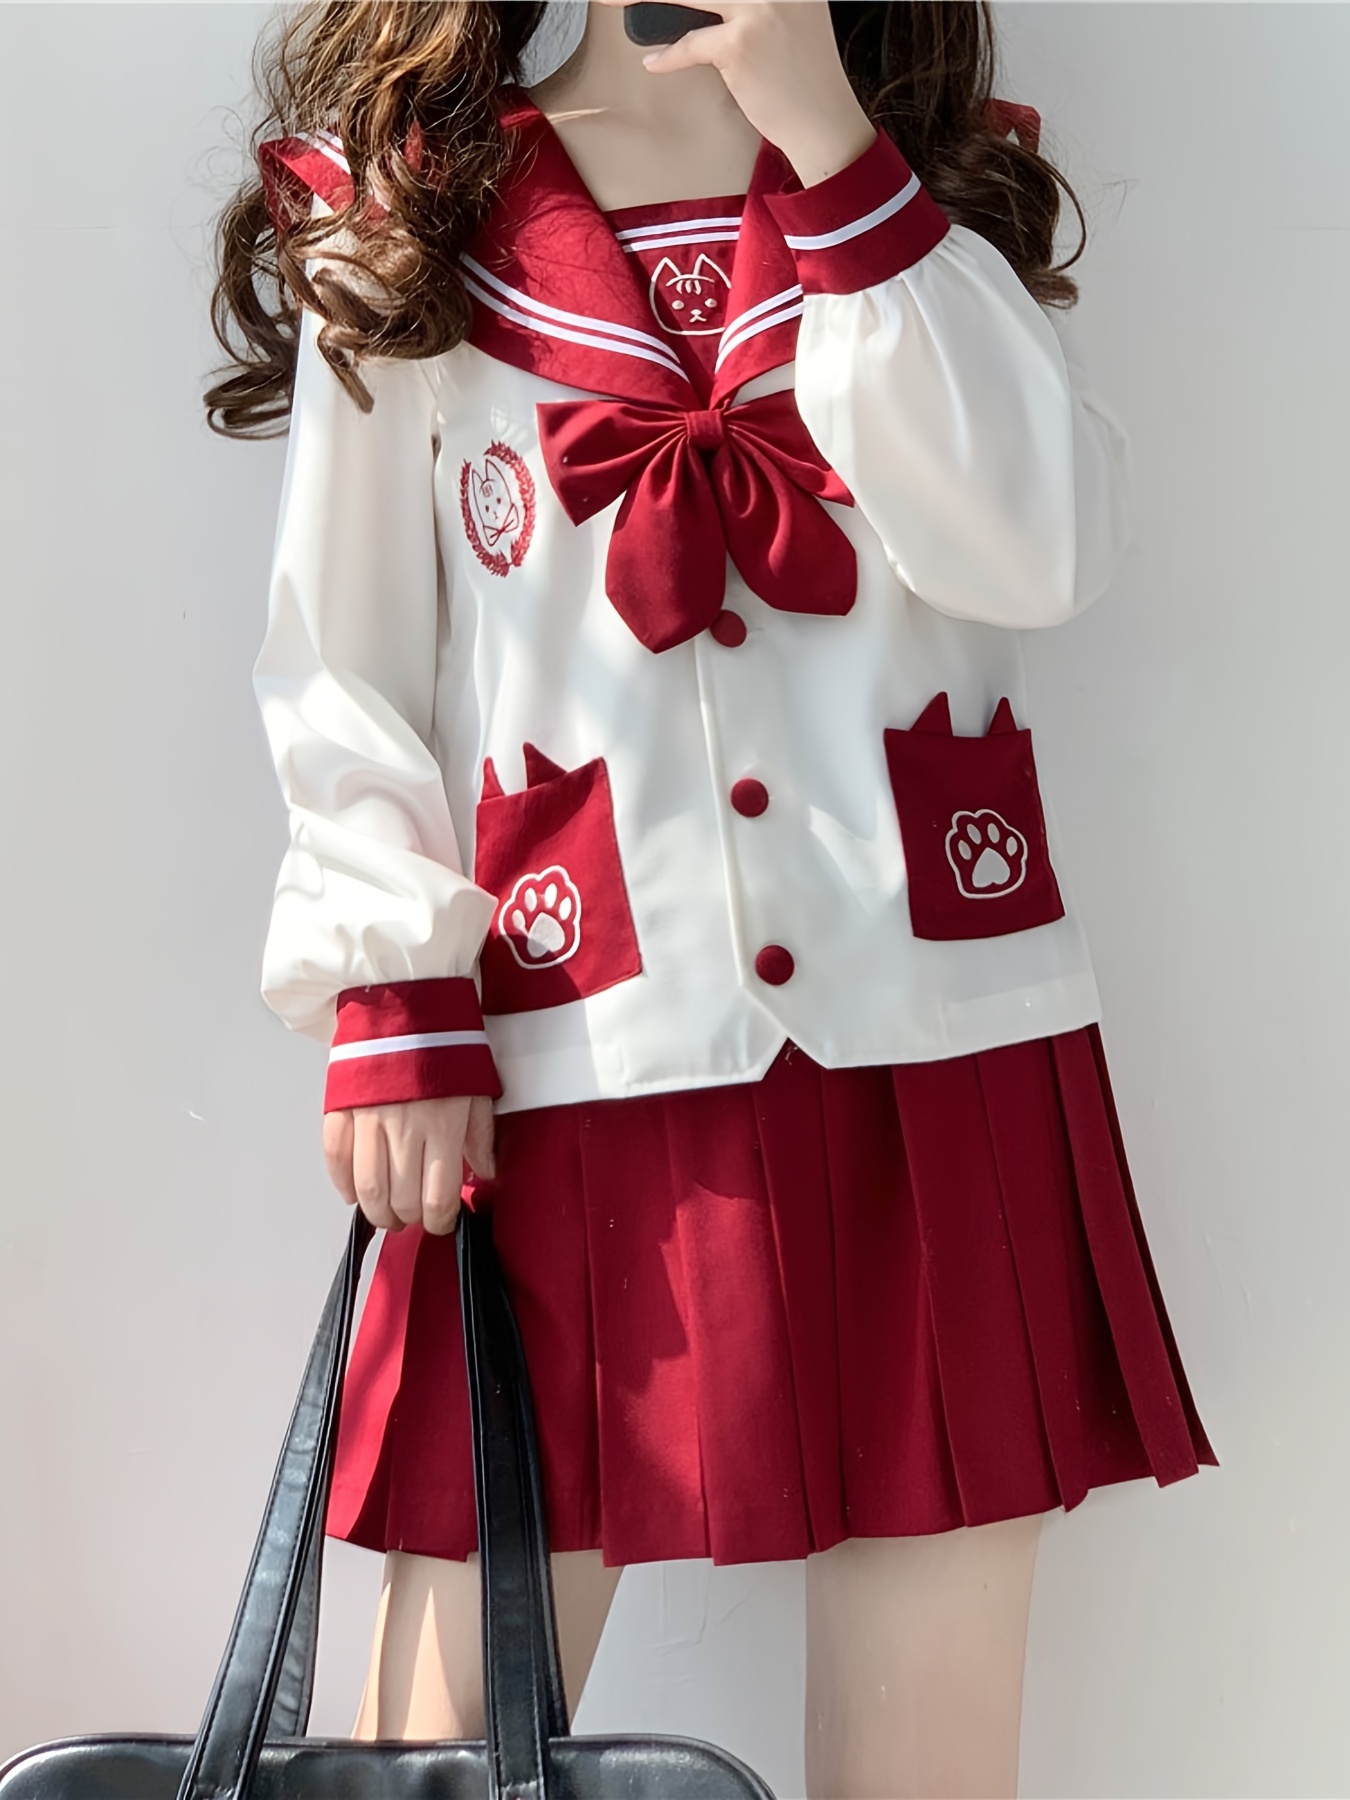 Enjoy Free Shipping Now Green Certified Us Women 3pc Anime School Girl Uniform Sailor Outfit 